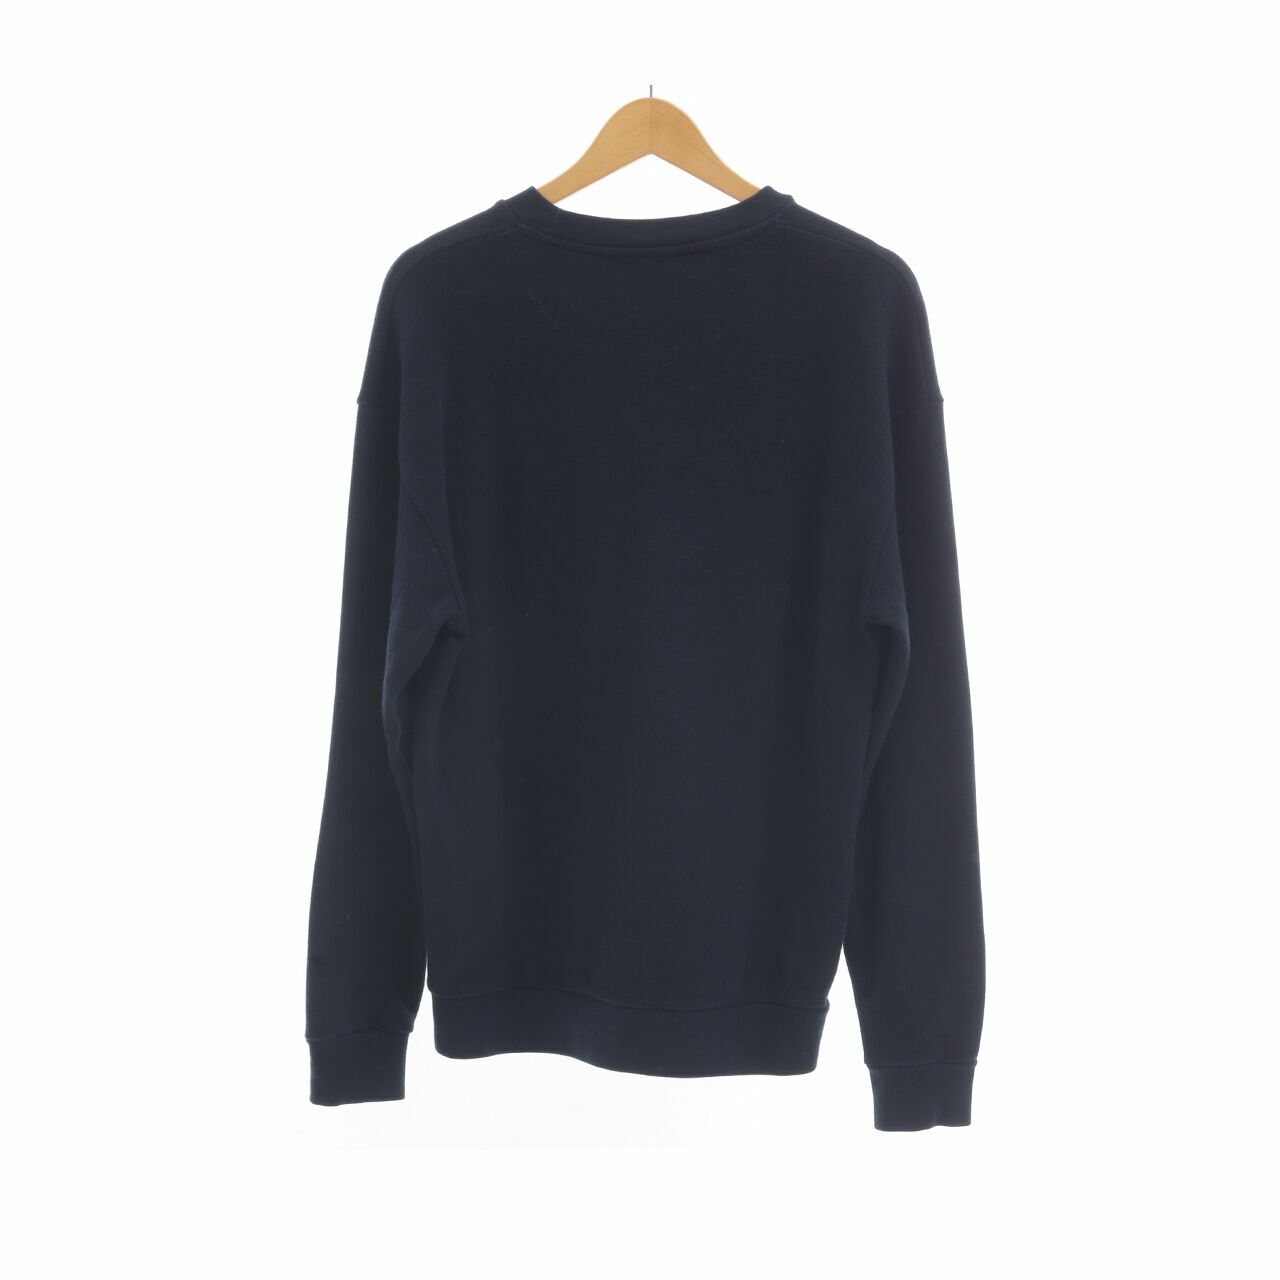 Zara Navy Sweatshirt